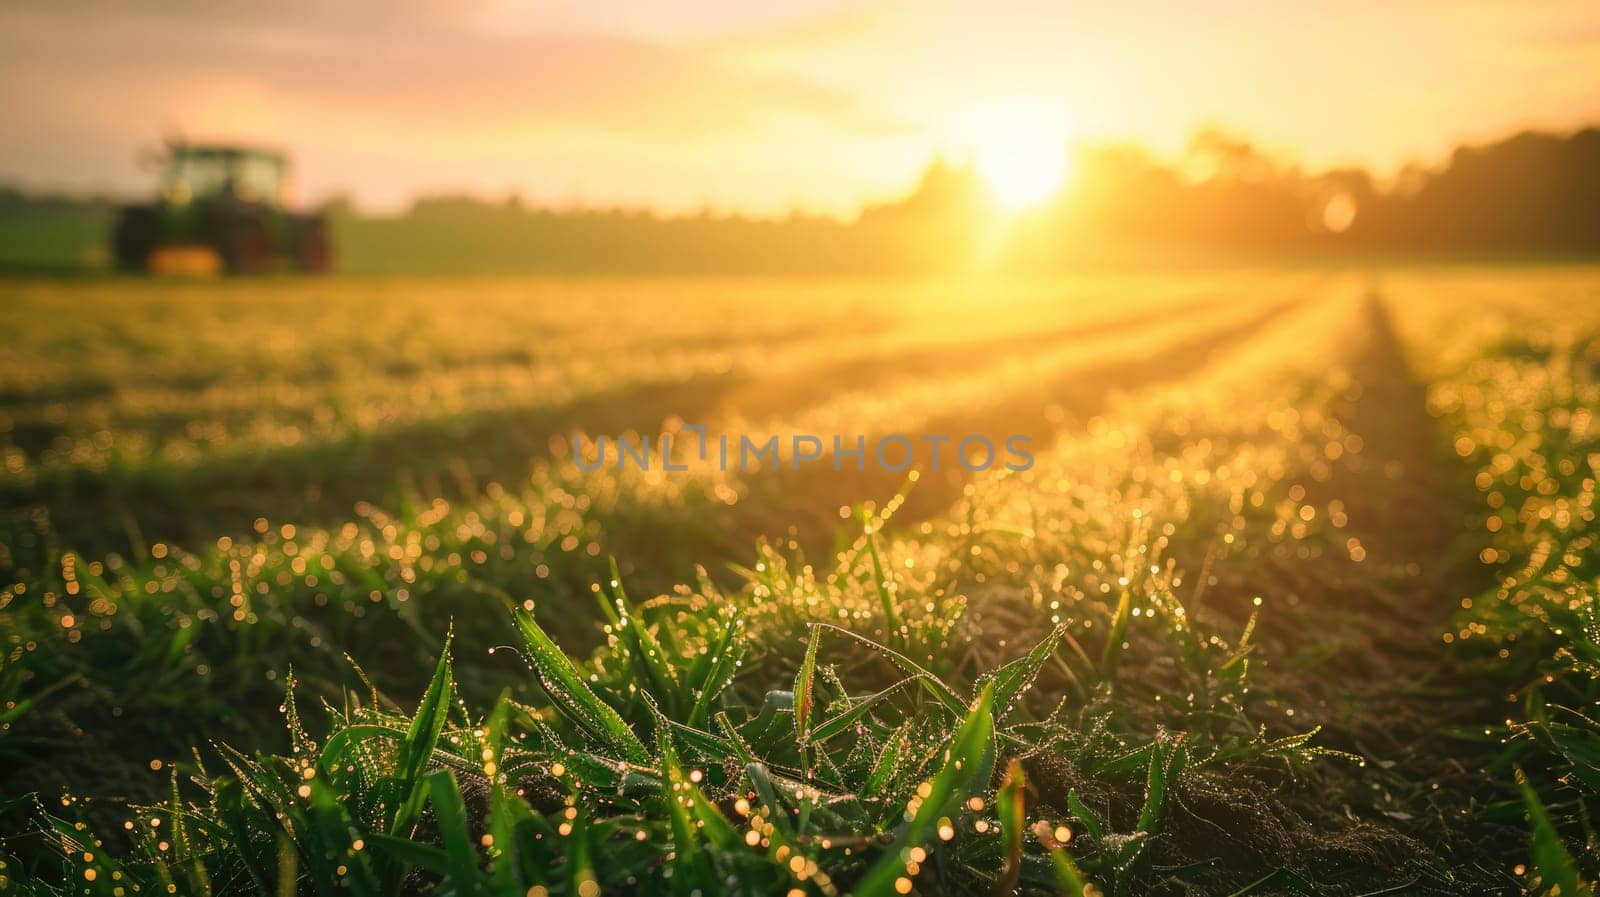 An early morning farmer's field, dew on crops, sunrise. Resplendent. by biancoblue